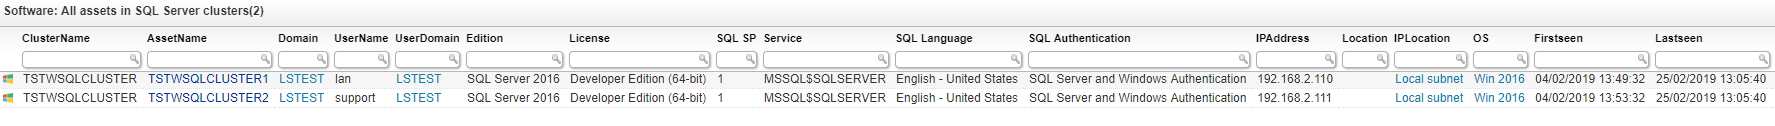 All Assets in SQL Server Clusters